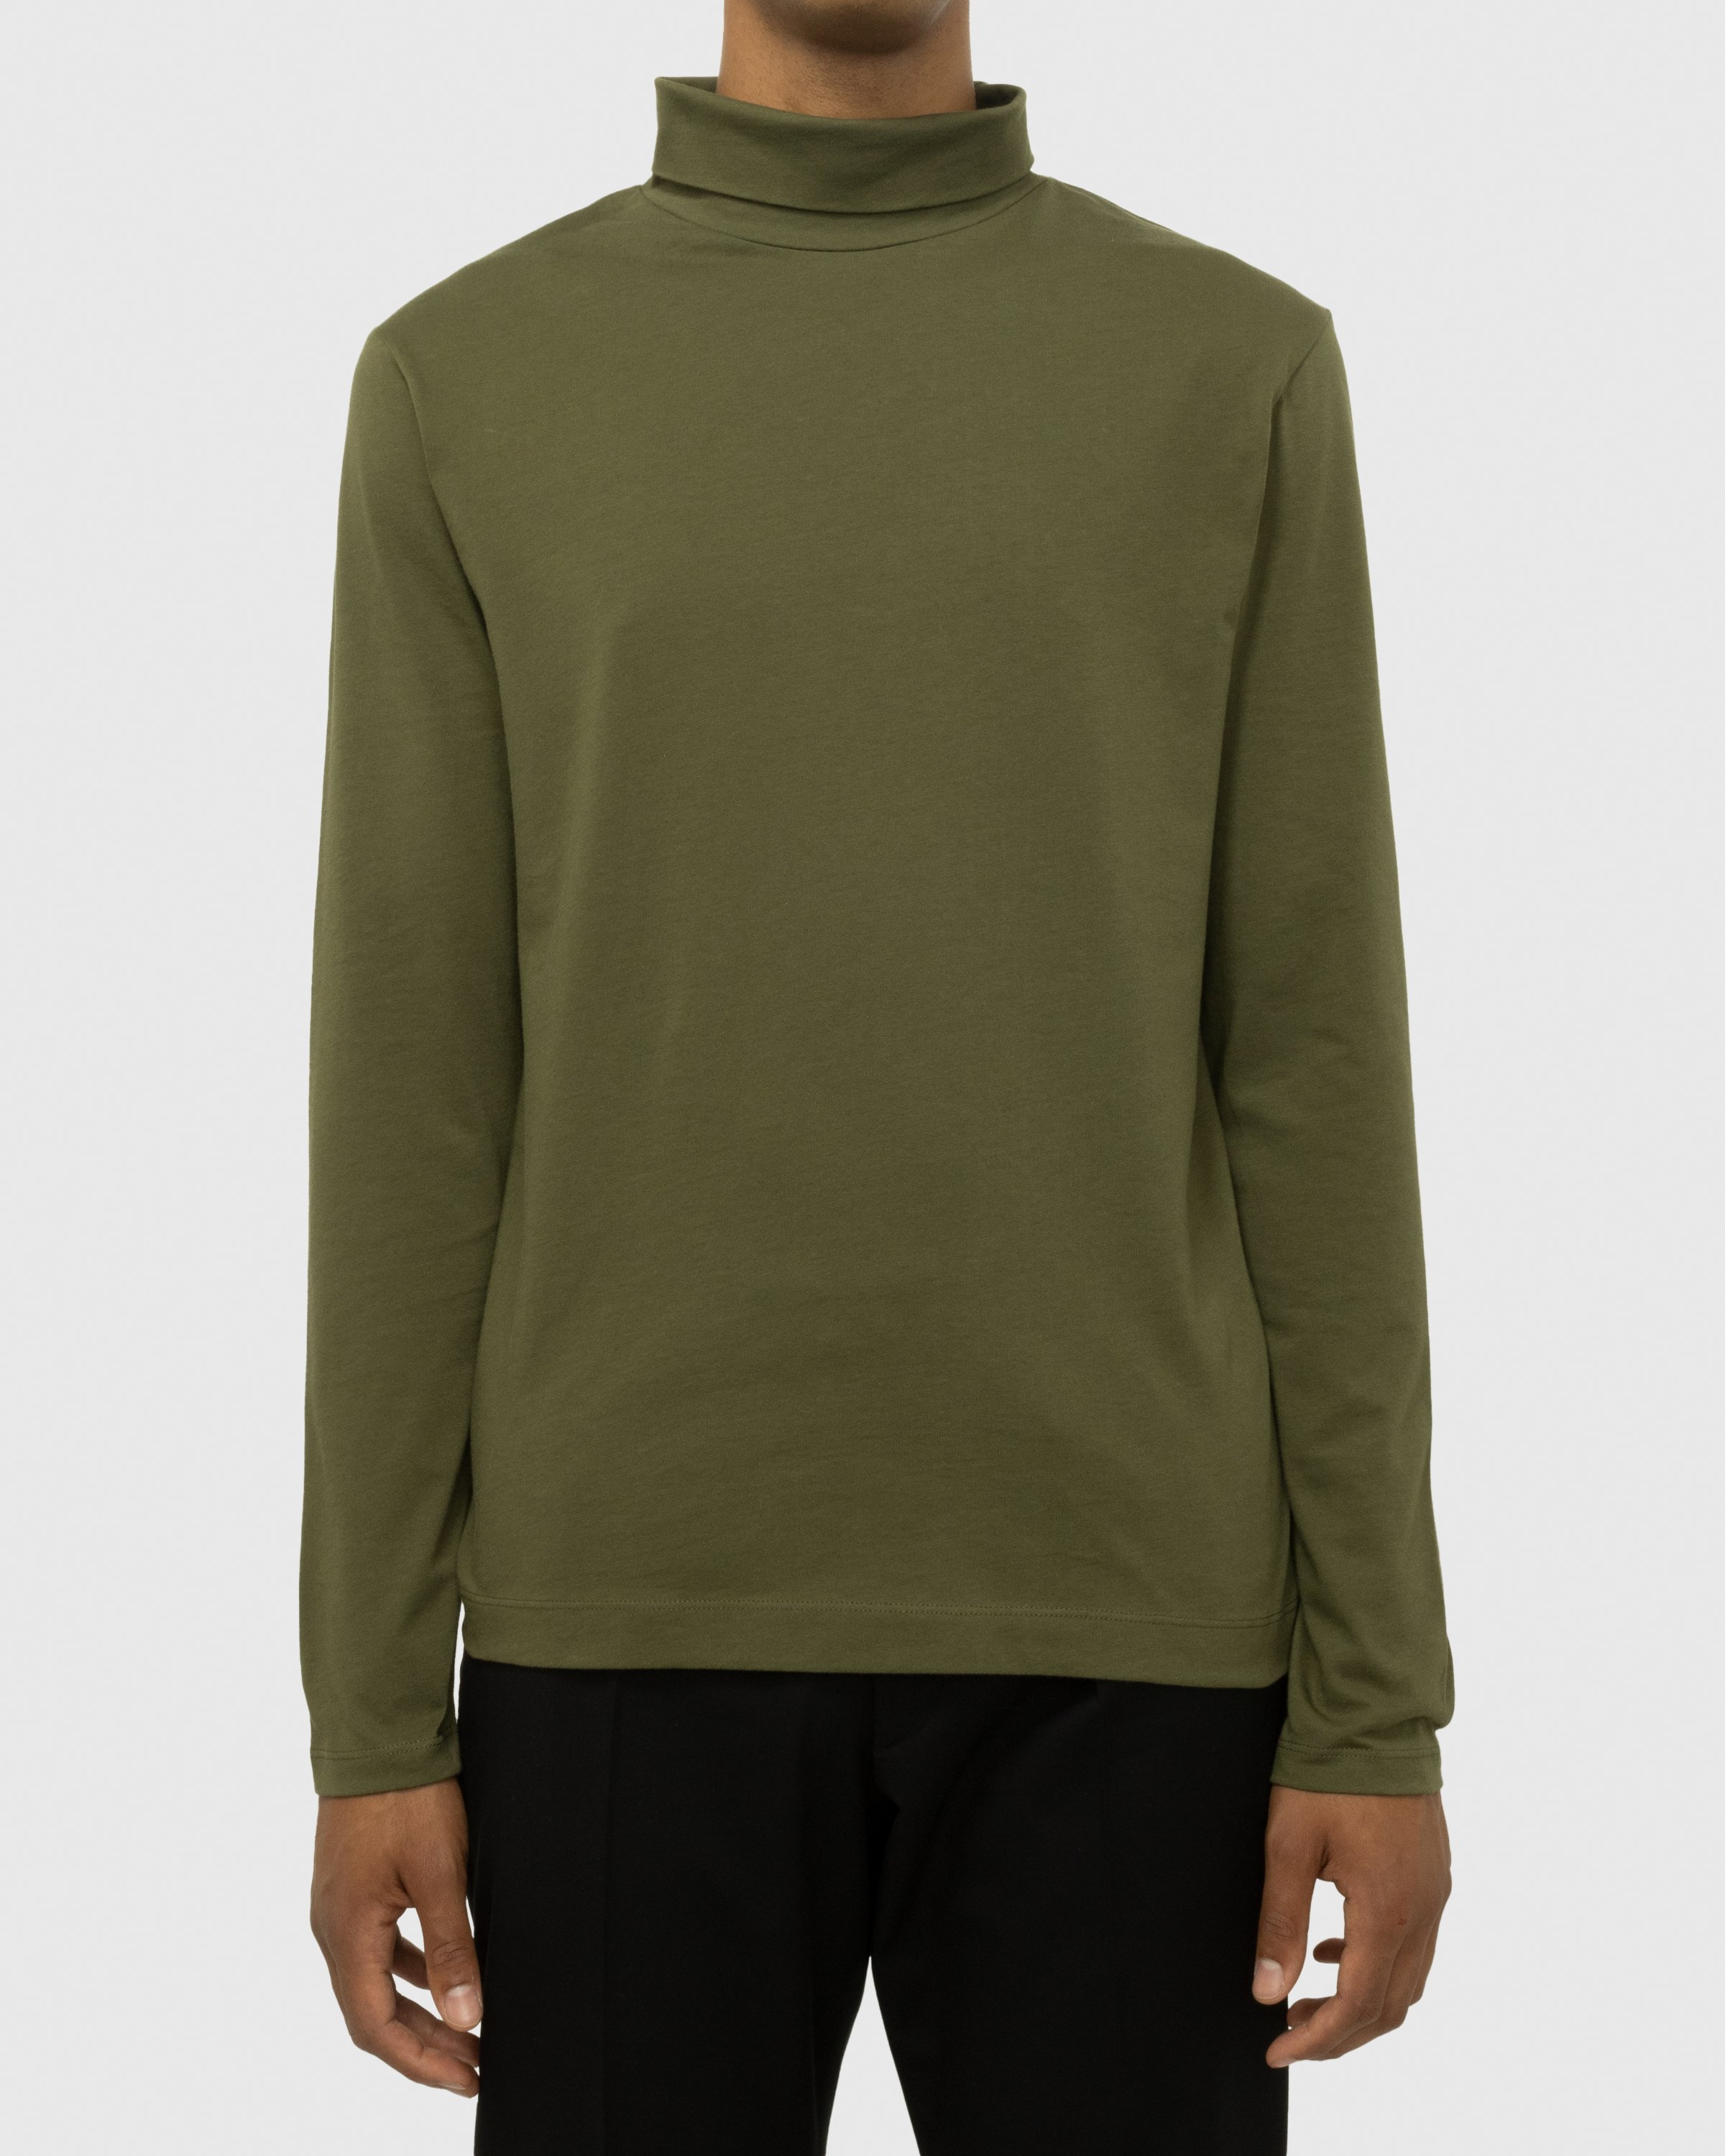 Dries van Noten - Heyzo Turtleneck Jersey Shirt Green - Clothing - Green - Image 4